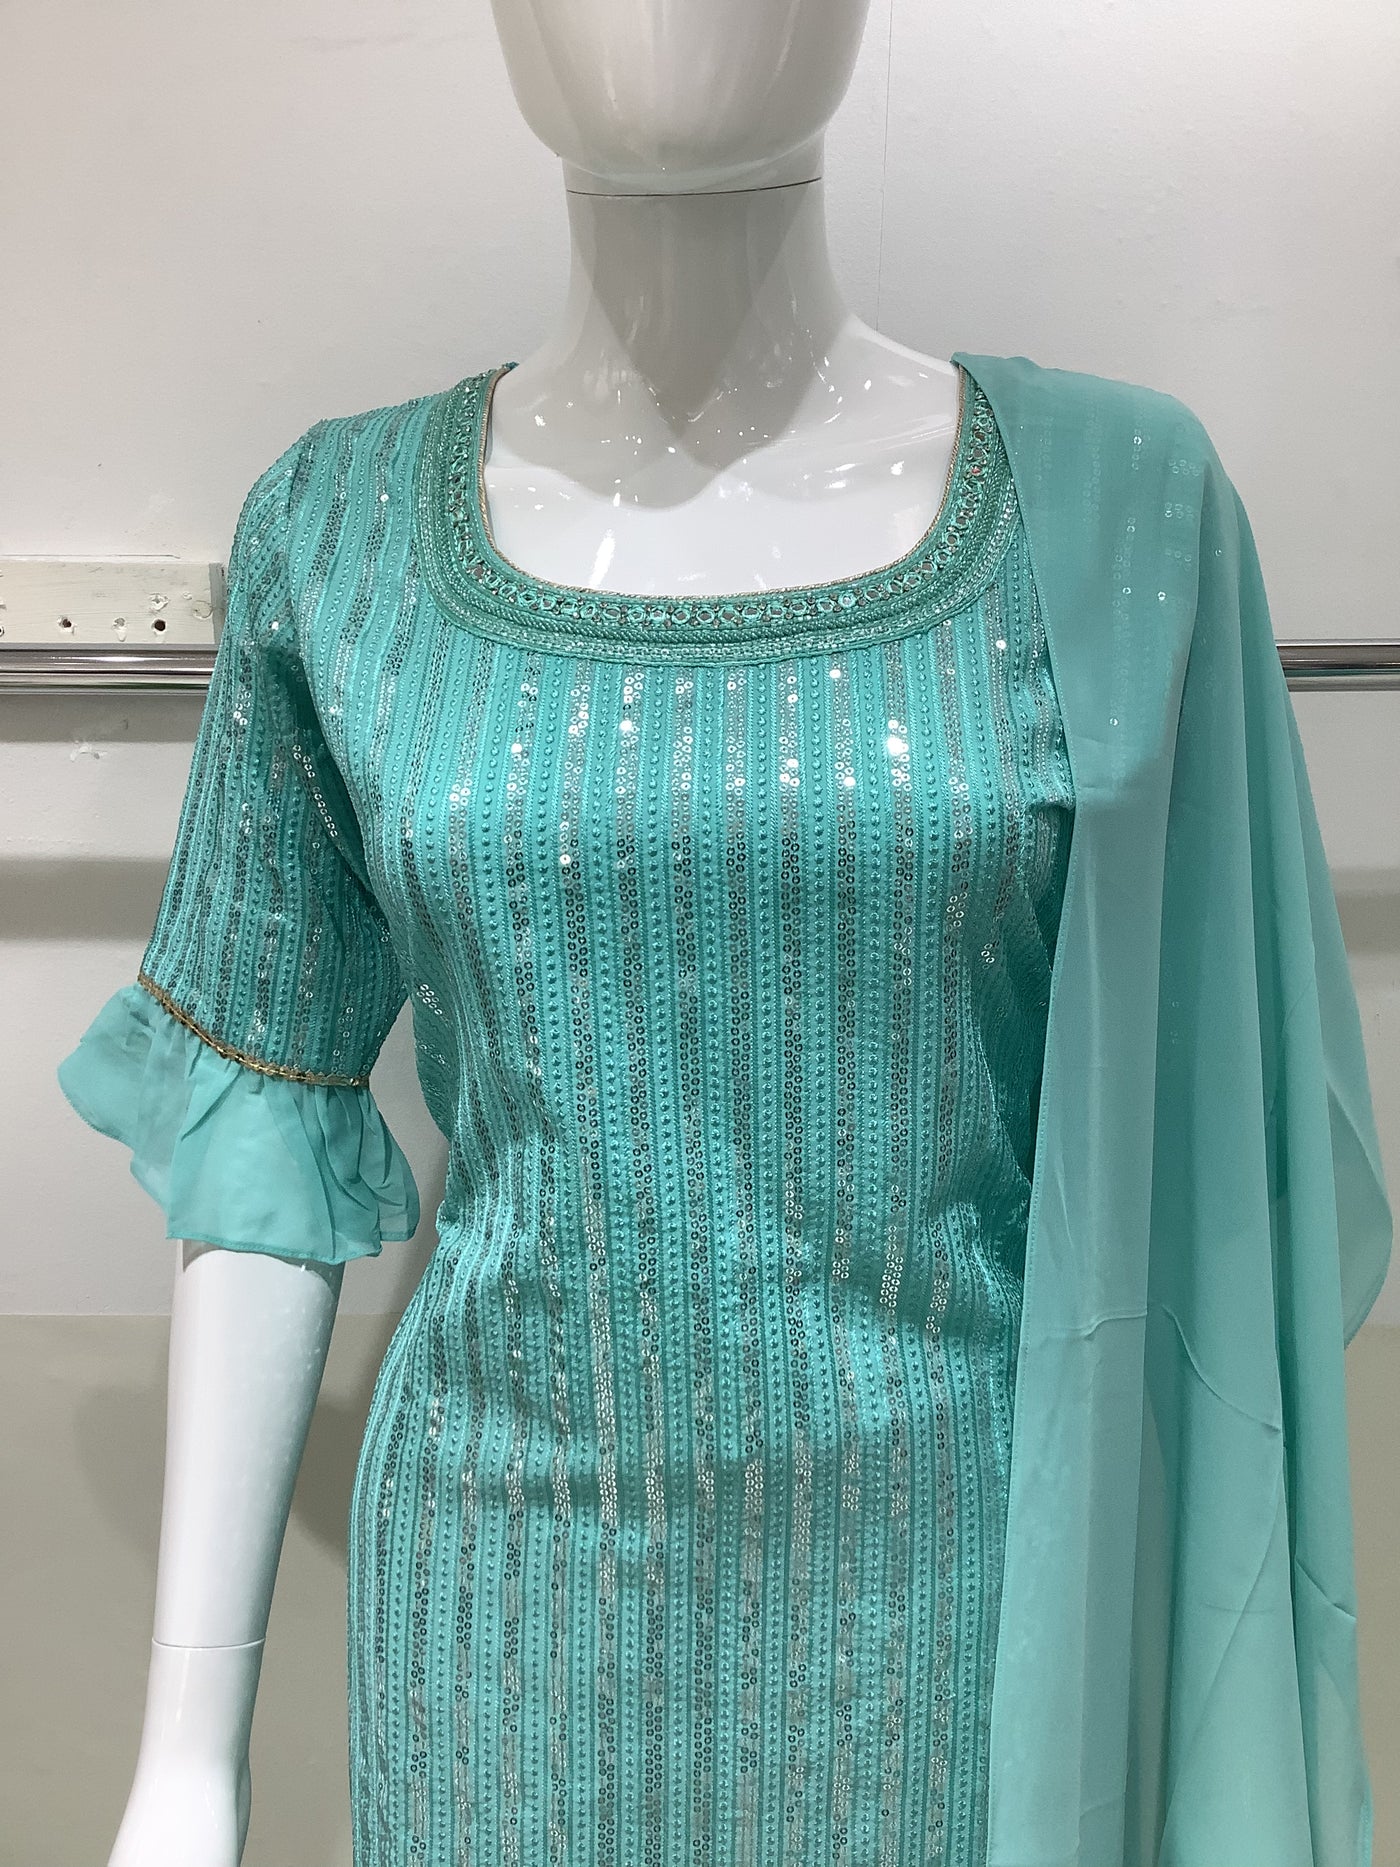  FK - Pakistani clothes